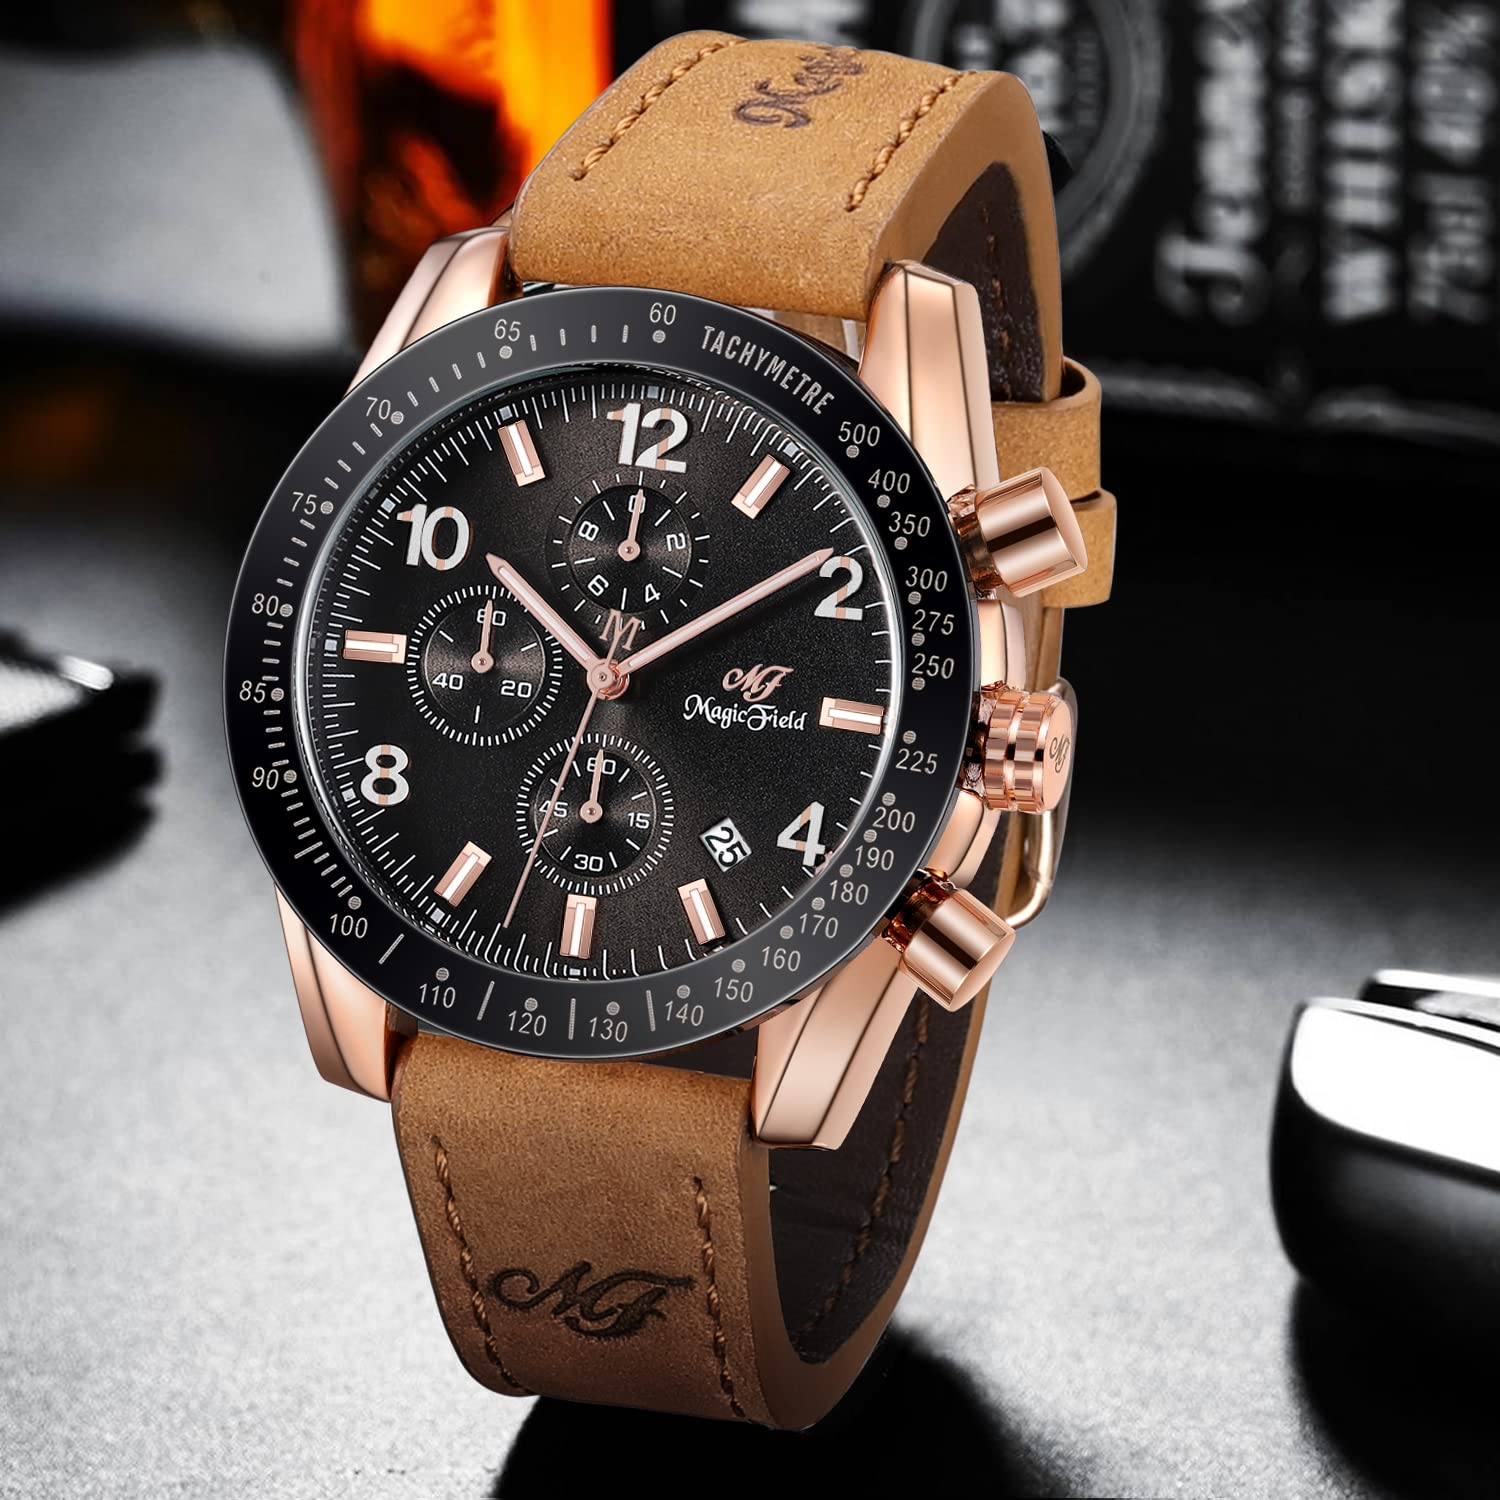 SIBOSUN Wrist Watch Minimalist Men Square Dial Bussiness Style Leather Strap Quartz Analog